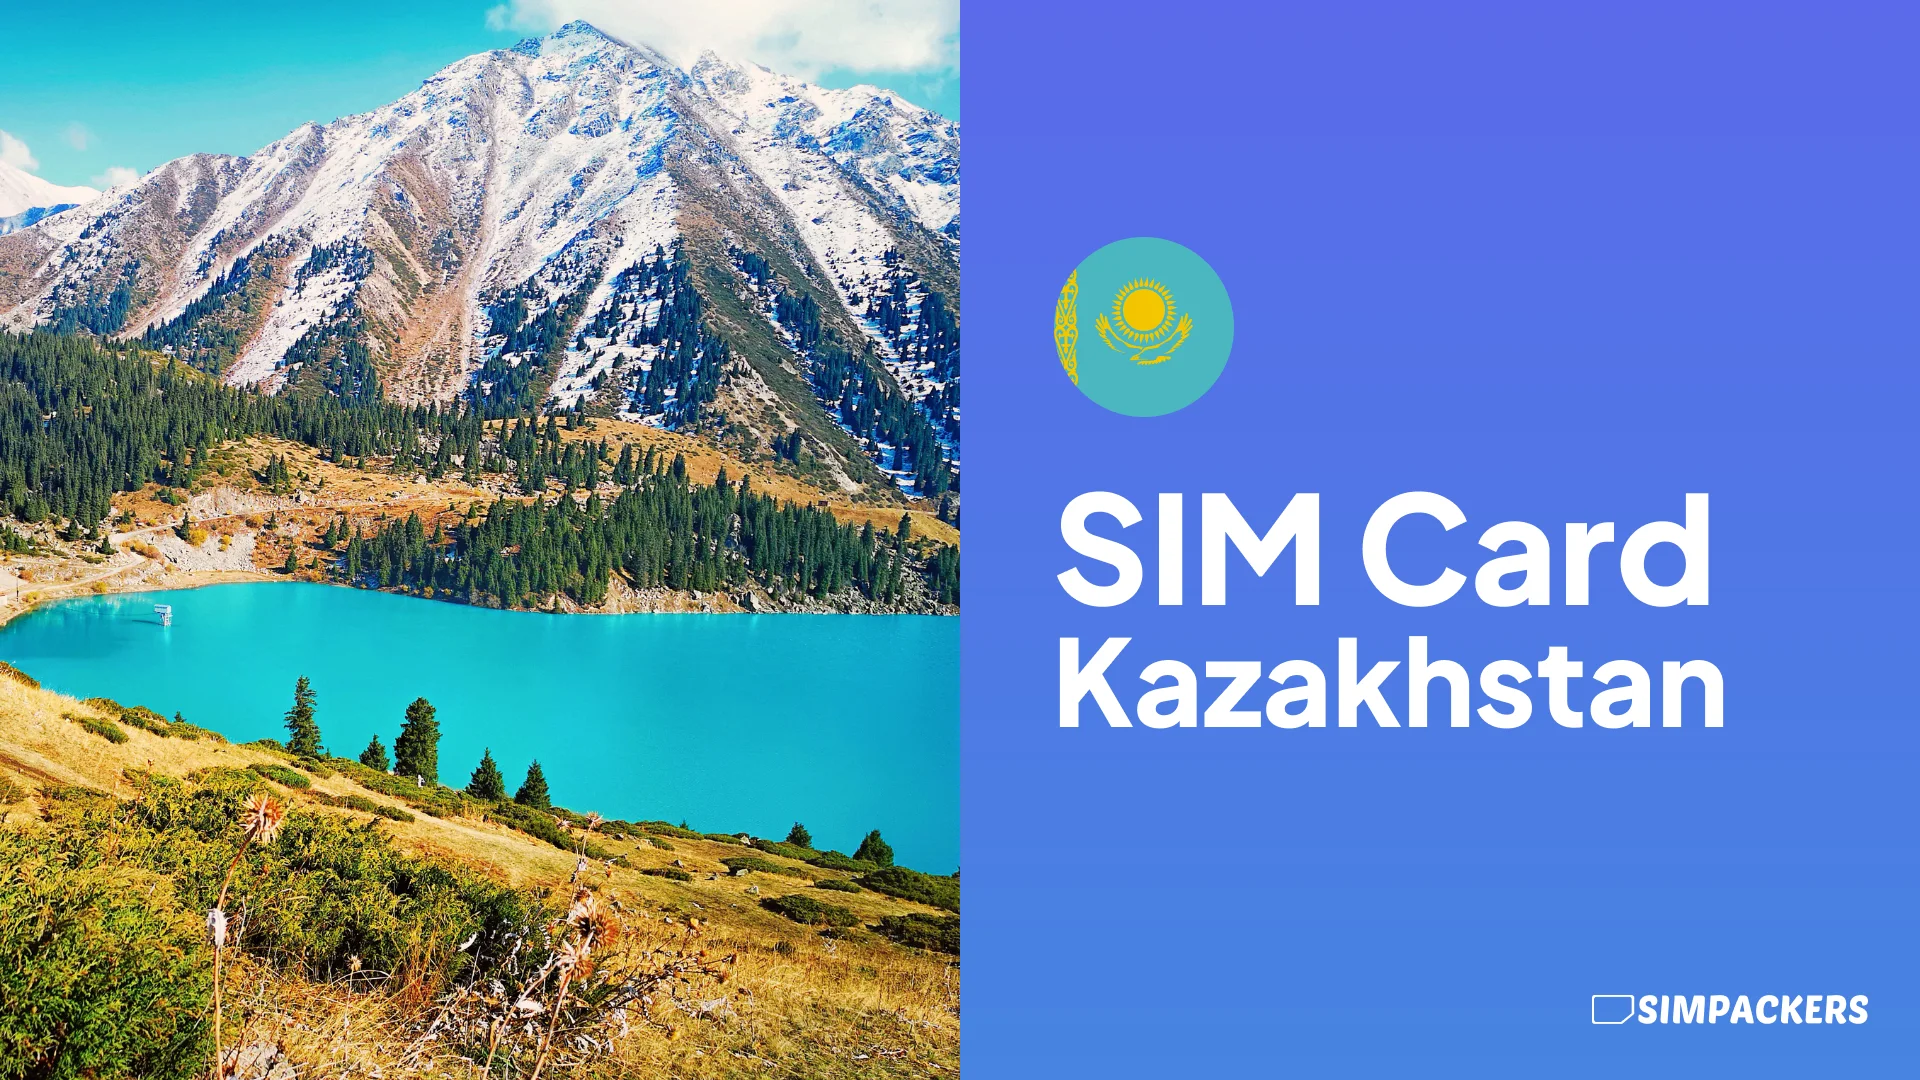 EN/FEATURED_IMAGES/sim-card-kazakhstan.webp